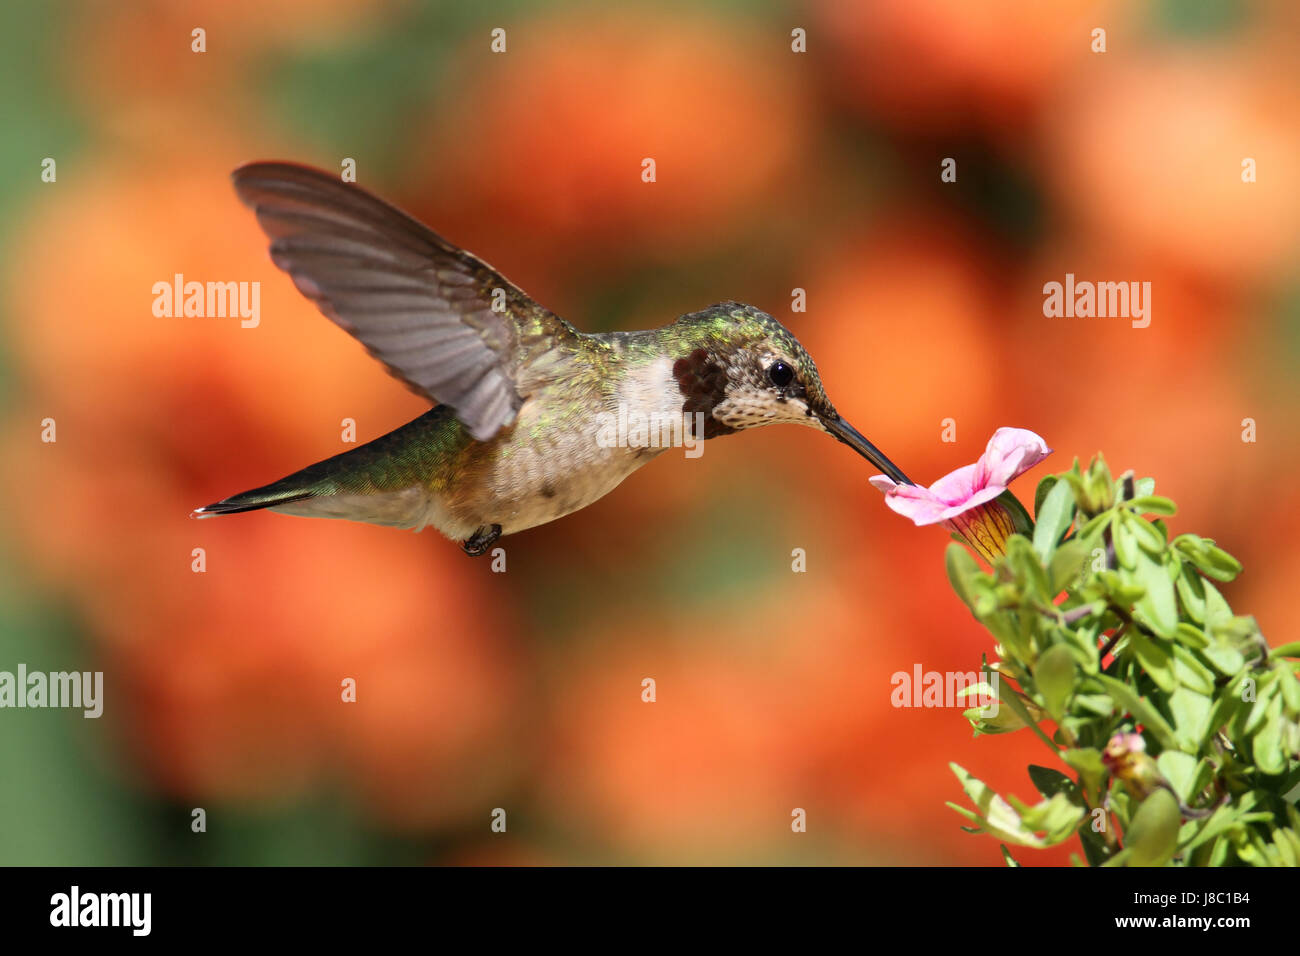 Flower, pianta selvatica, uccelli selvatici, Hummingbird, natura, animali, uccelli, Foto Stock